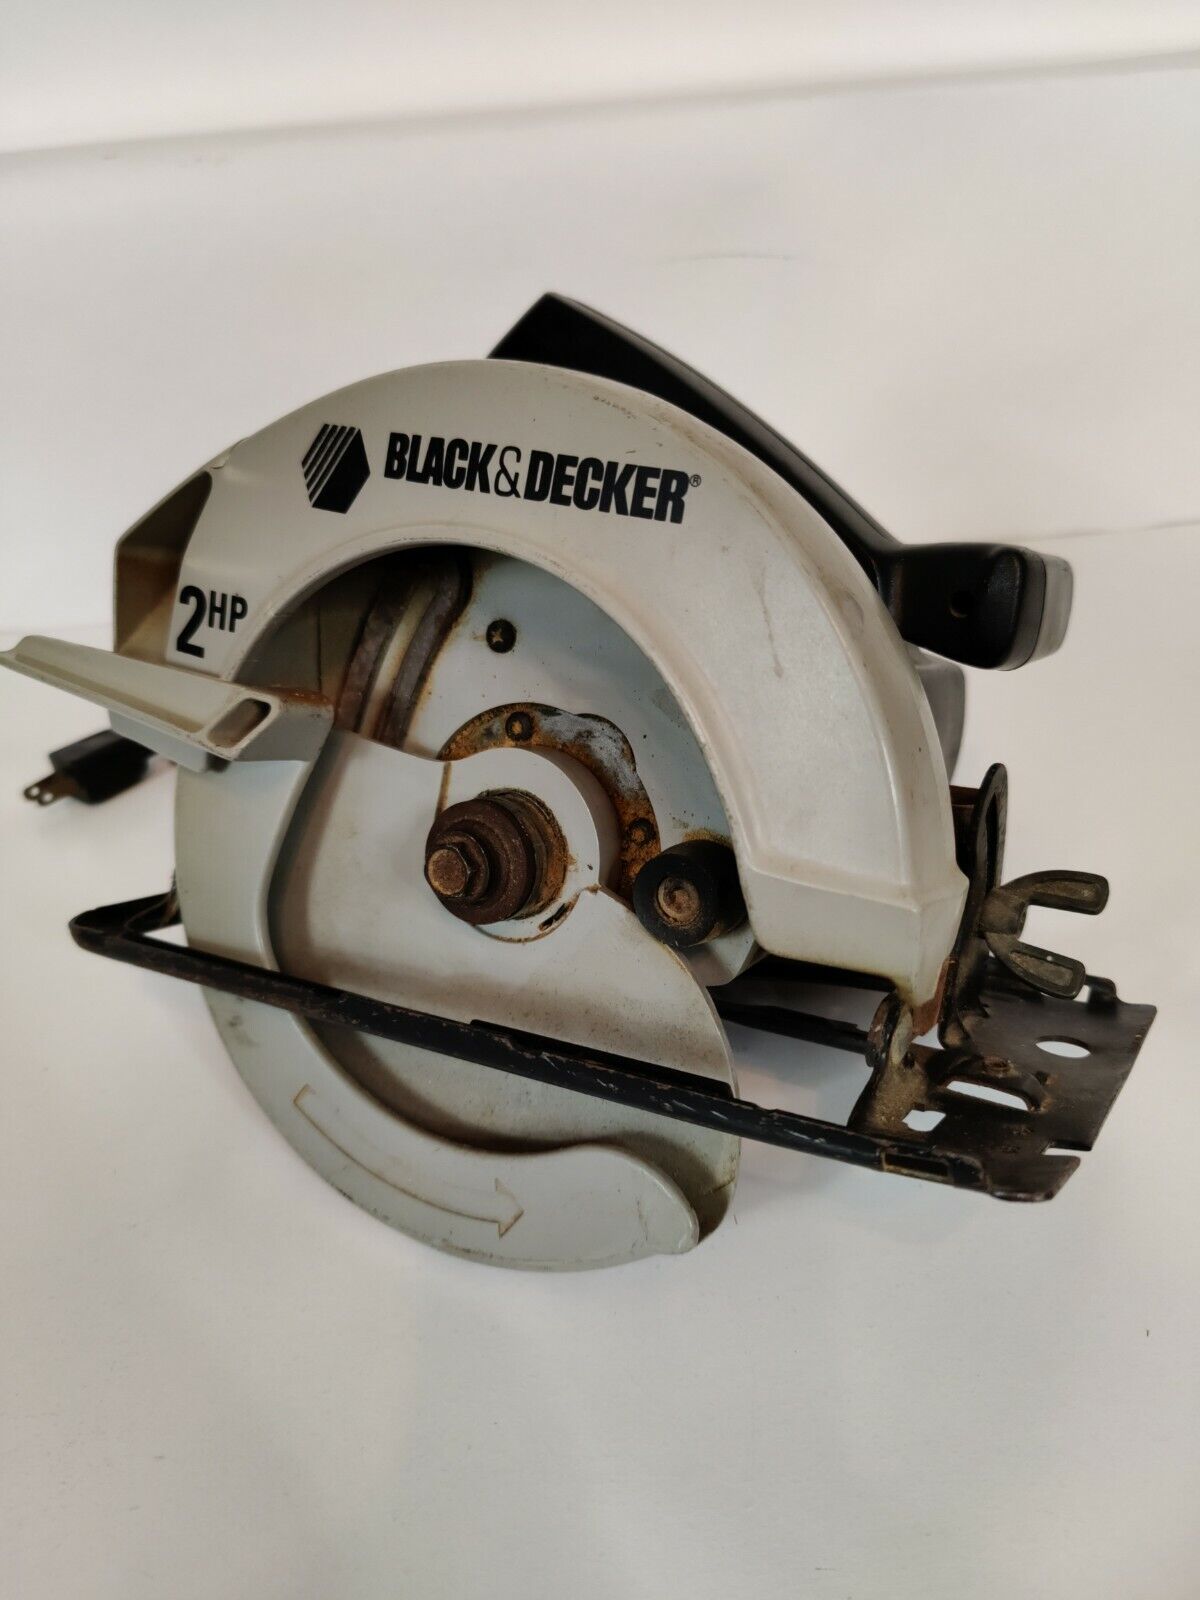 Black & Decker Circular Saw 7 1/4 No. 7358 2 HP 5300 RPM 10 Amps